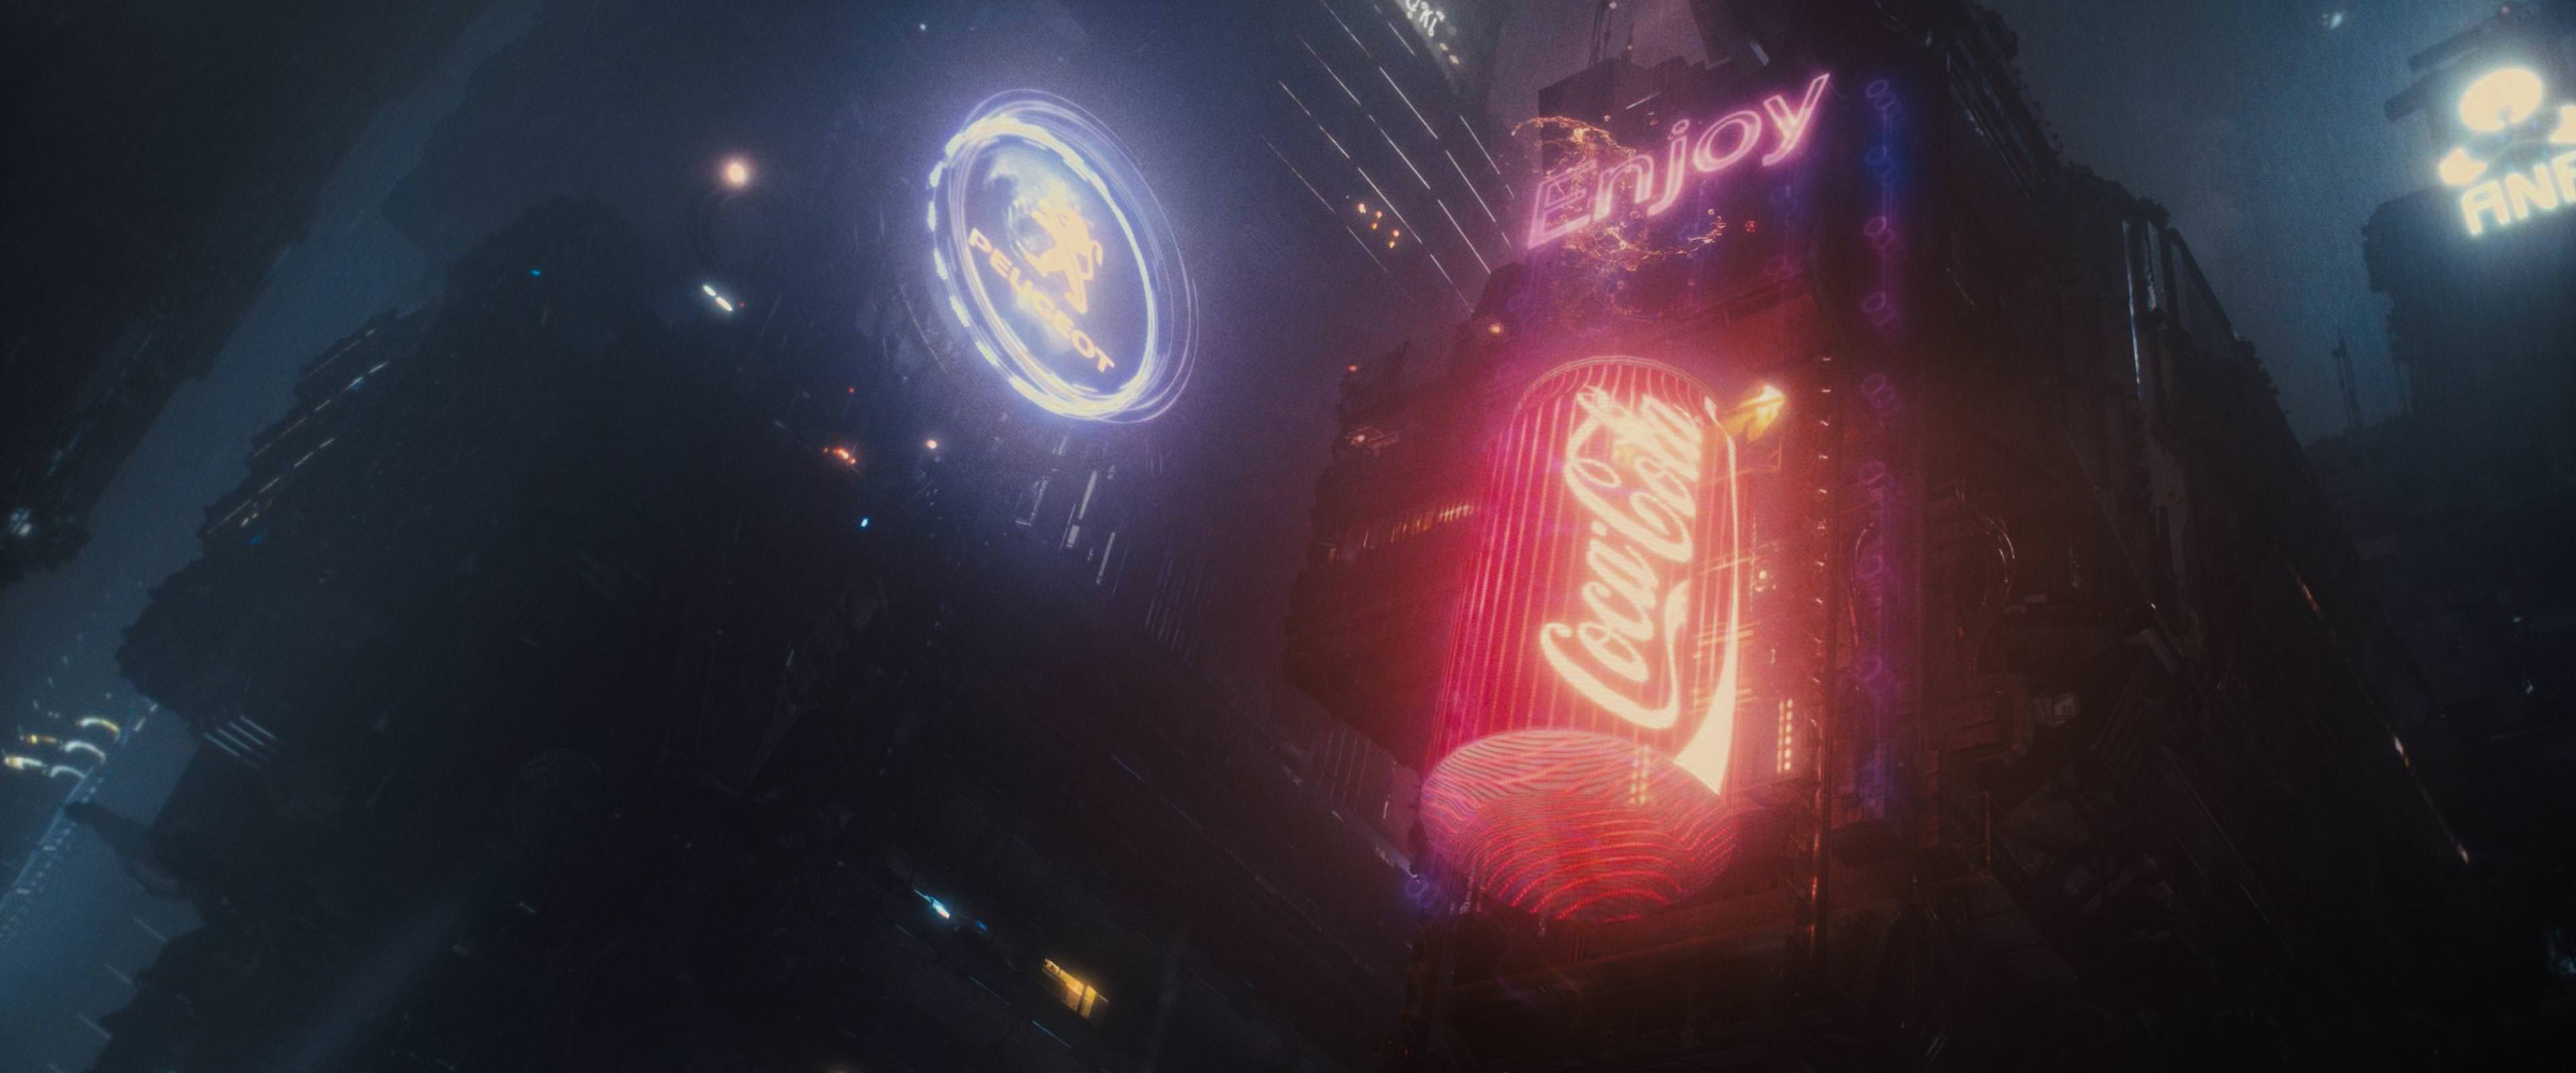 Blade Runner 2049 Backdrop Image Wallpapers